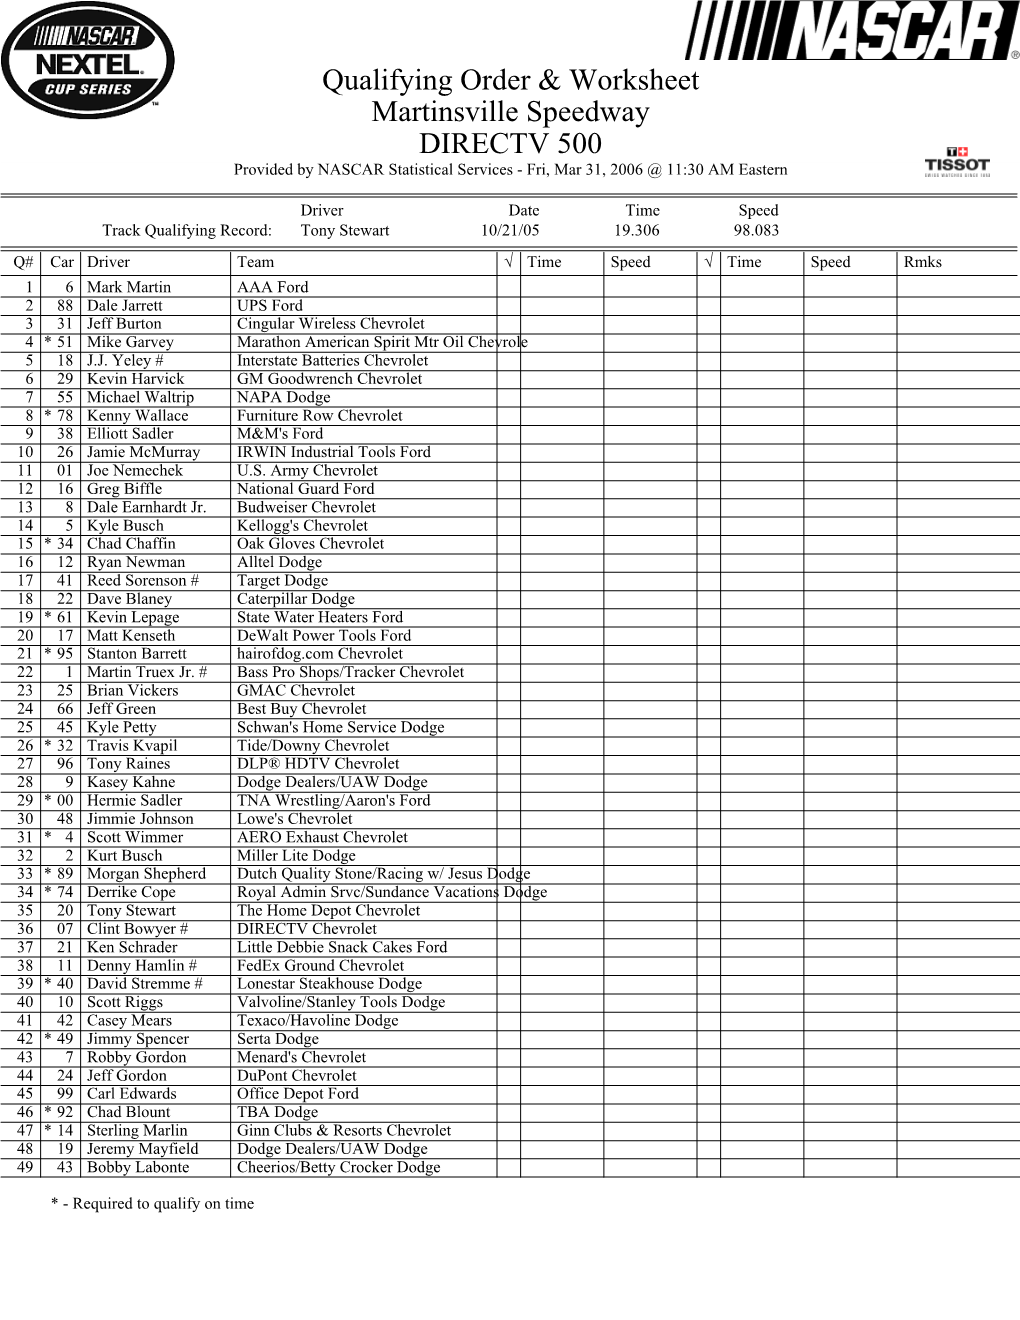 Qualifying Order & Worksheet Martinsville Speedway DIRECTV